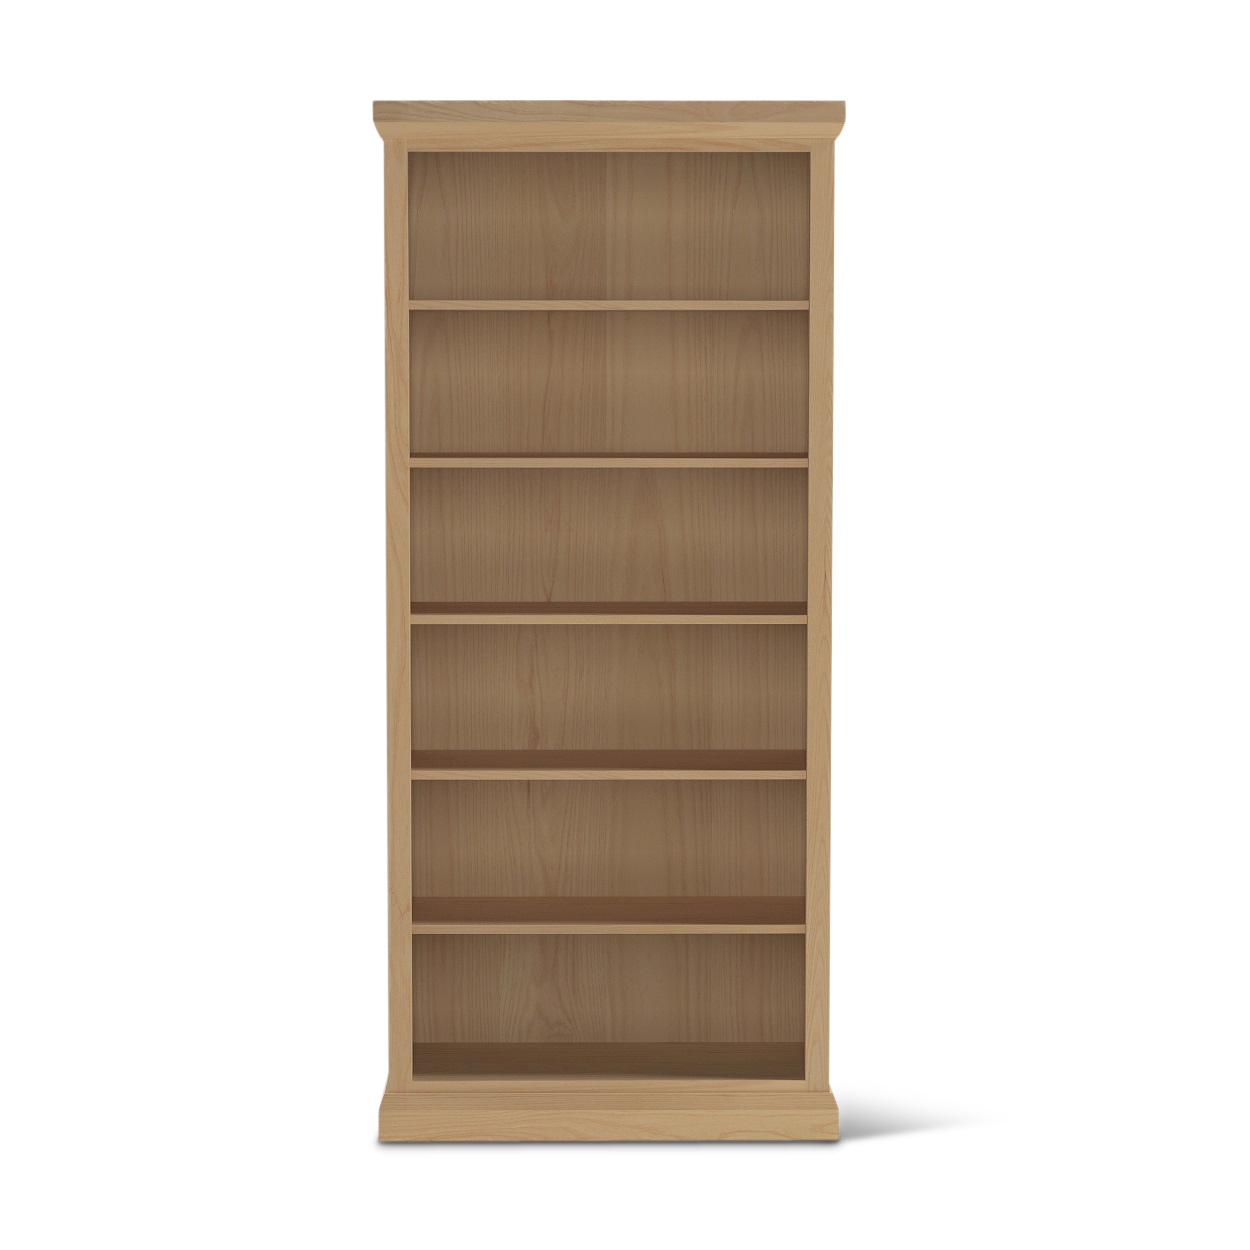 82" tall Bureau ash wood contemporary bookshelf